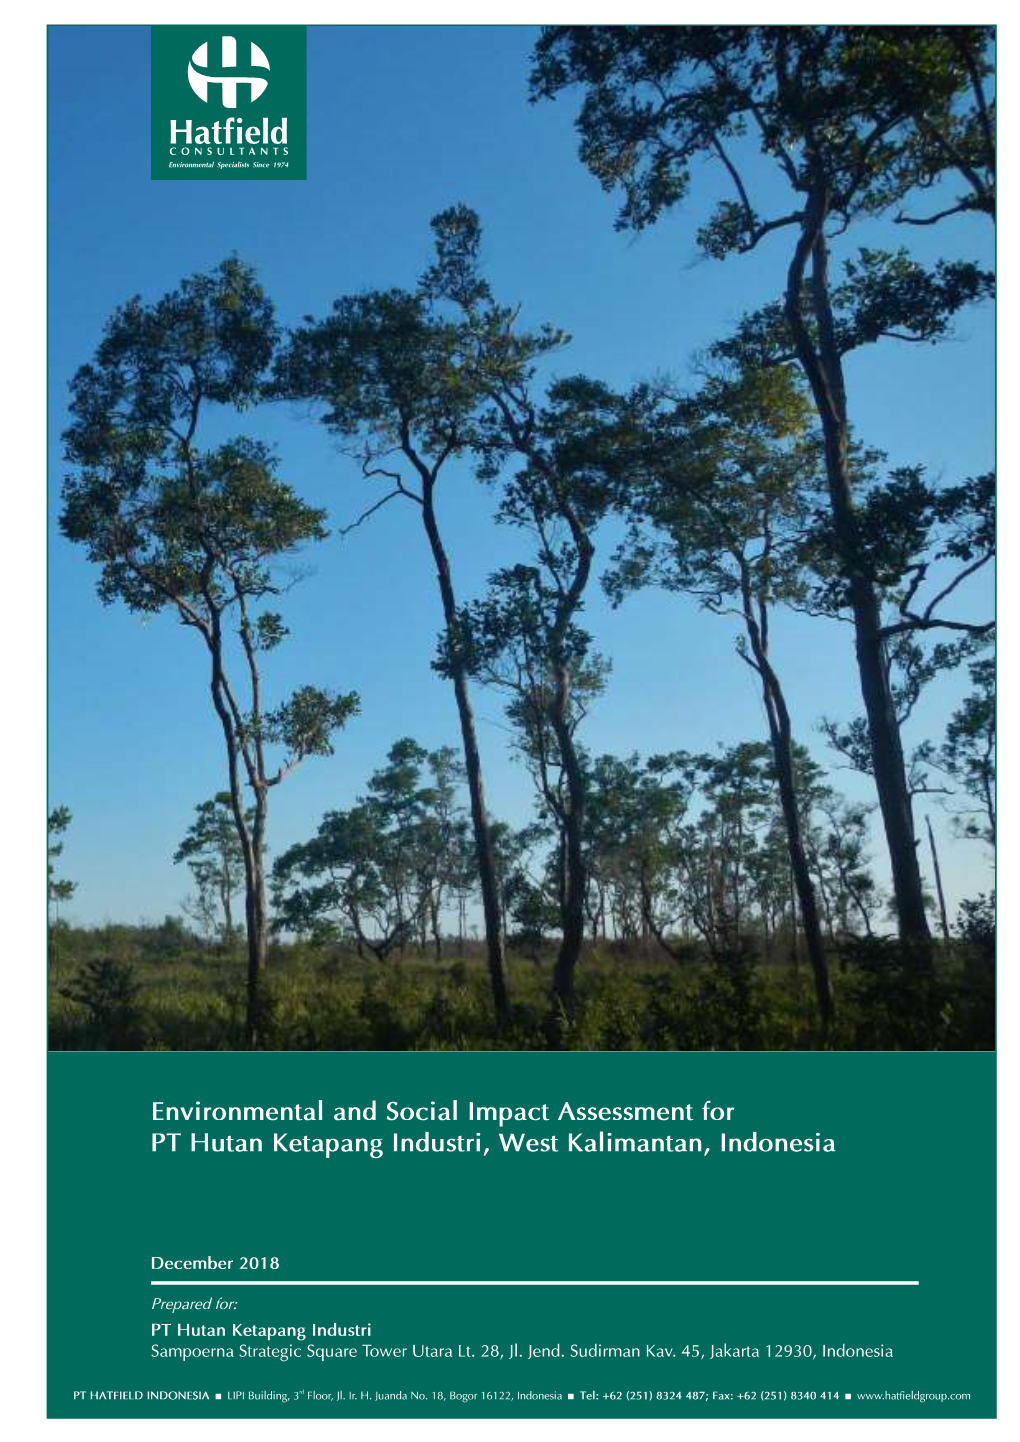 Environmental and Social Impact Assessment for PT Hutan Ketapang Industri, West Kalimantan, Indonesia